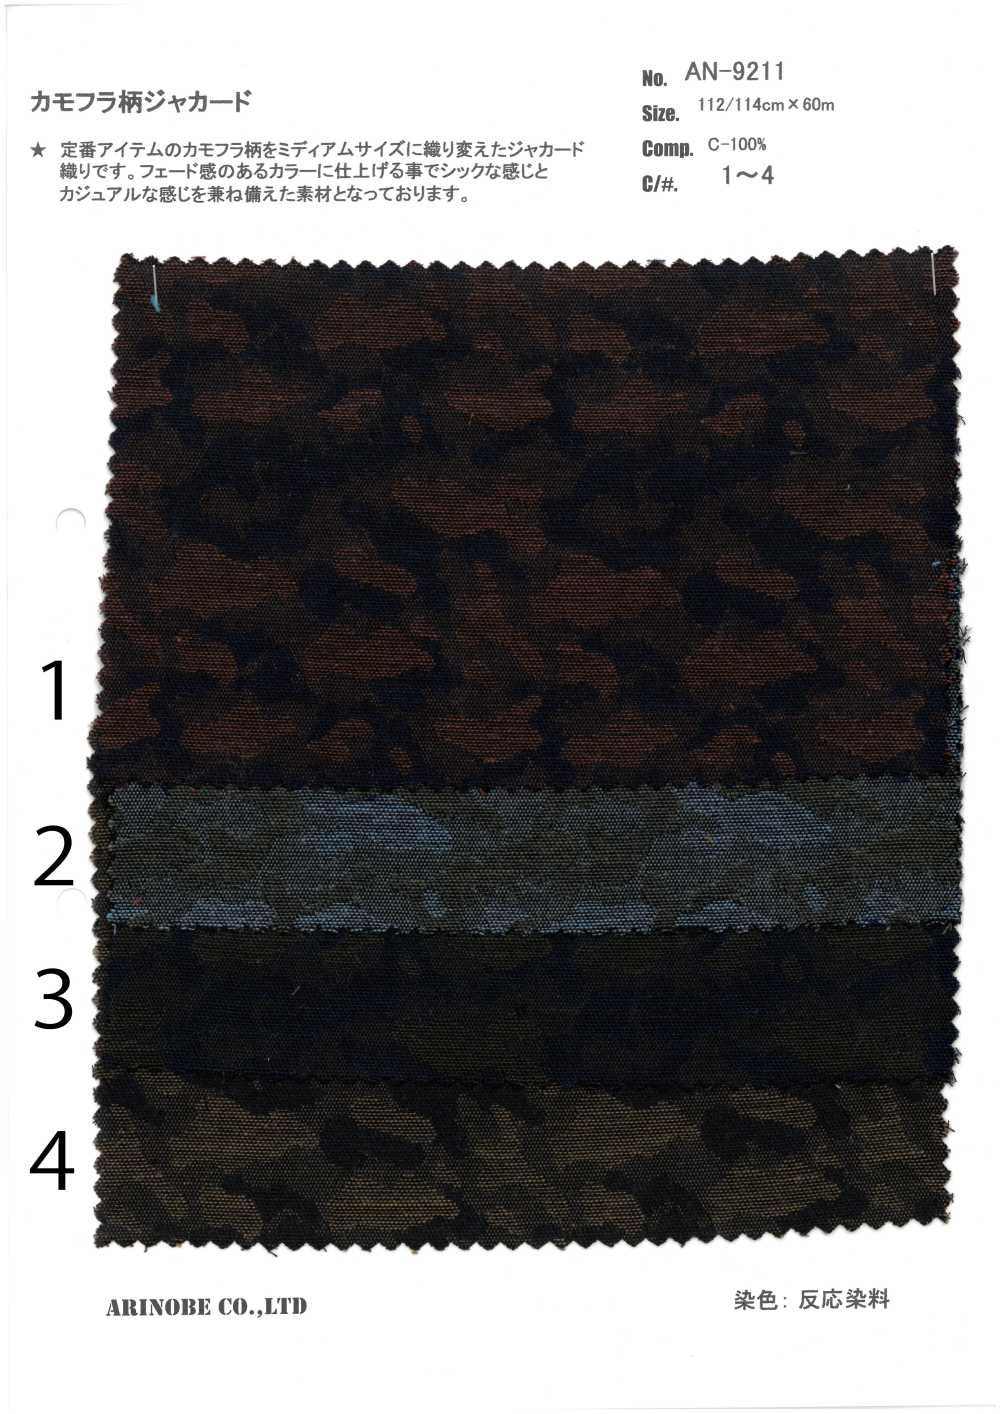 AN-9211 Camouflage Pattern Jacquard[Textile / Fabric] ARINOBE CO., LTD.